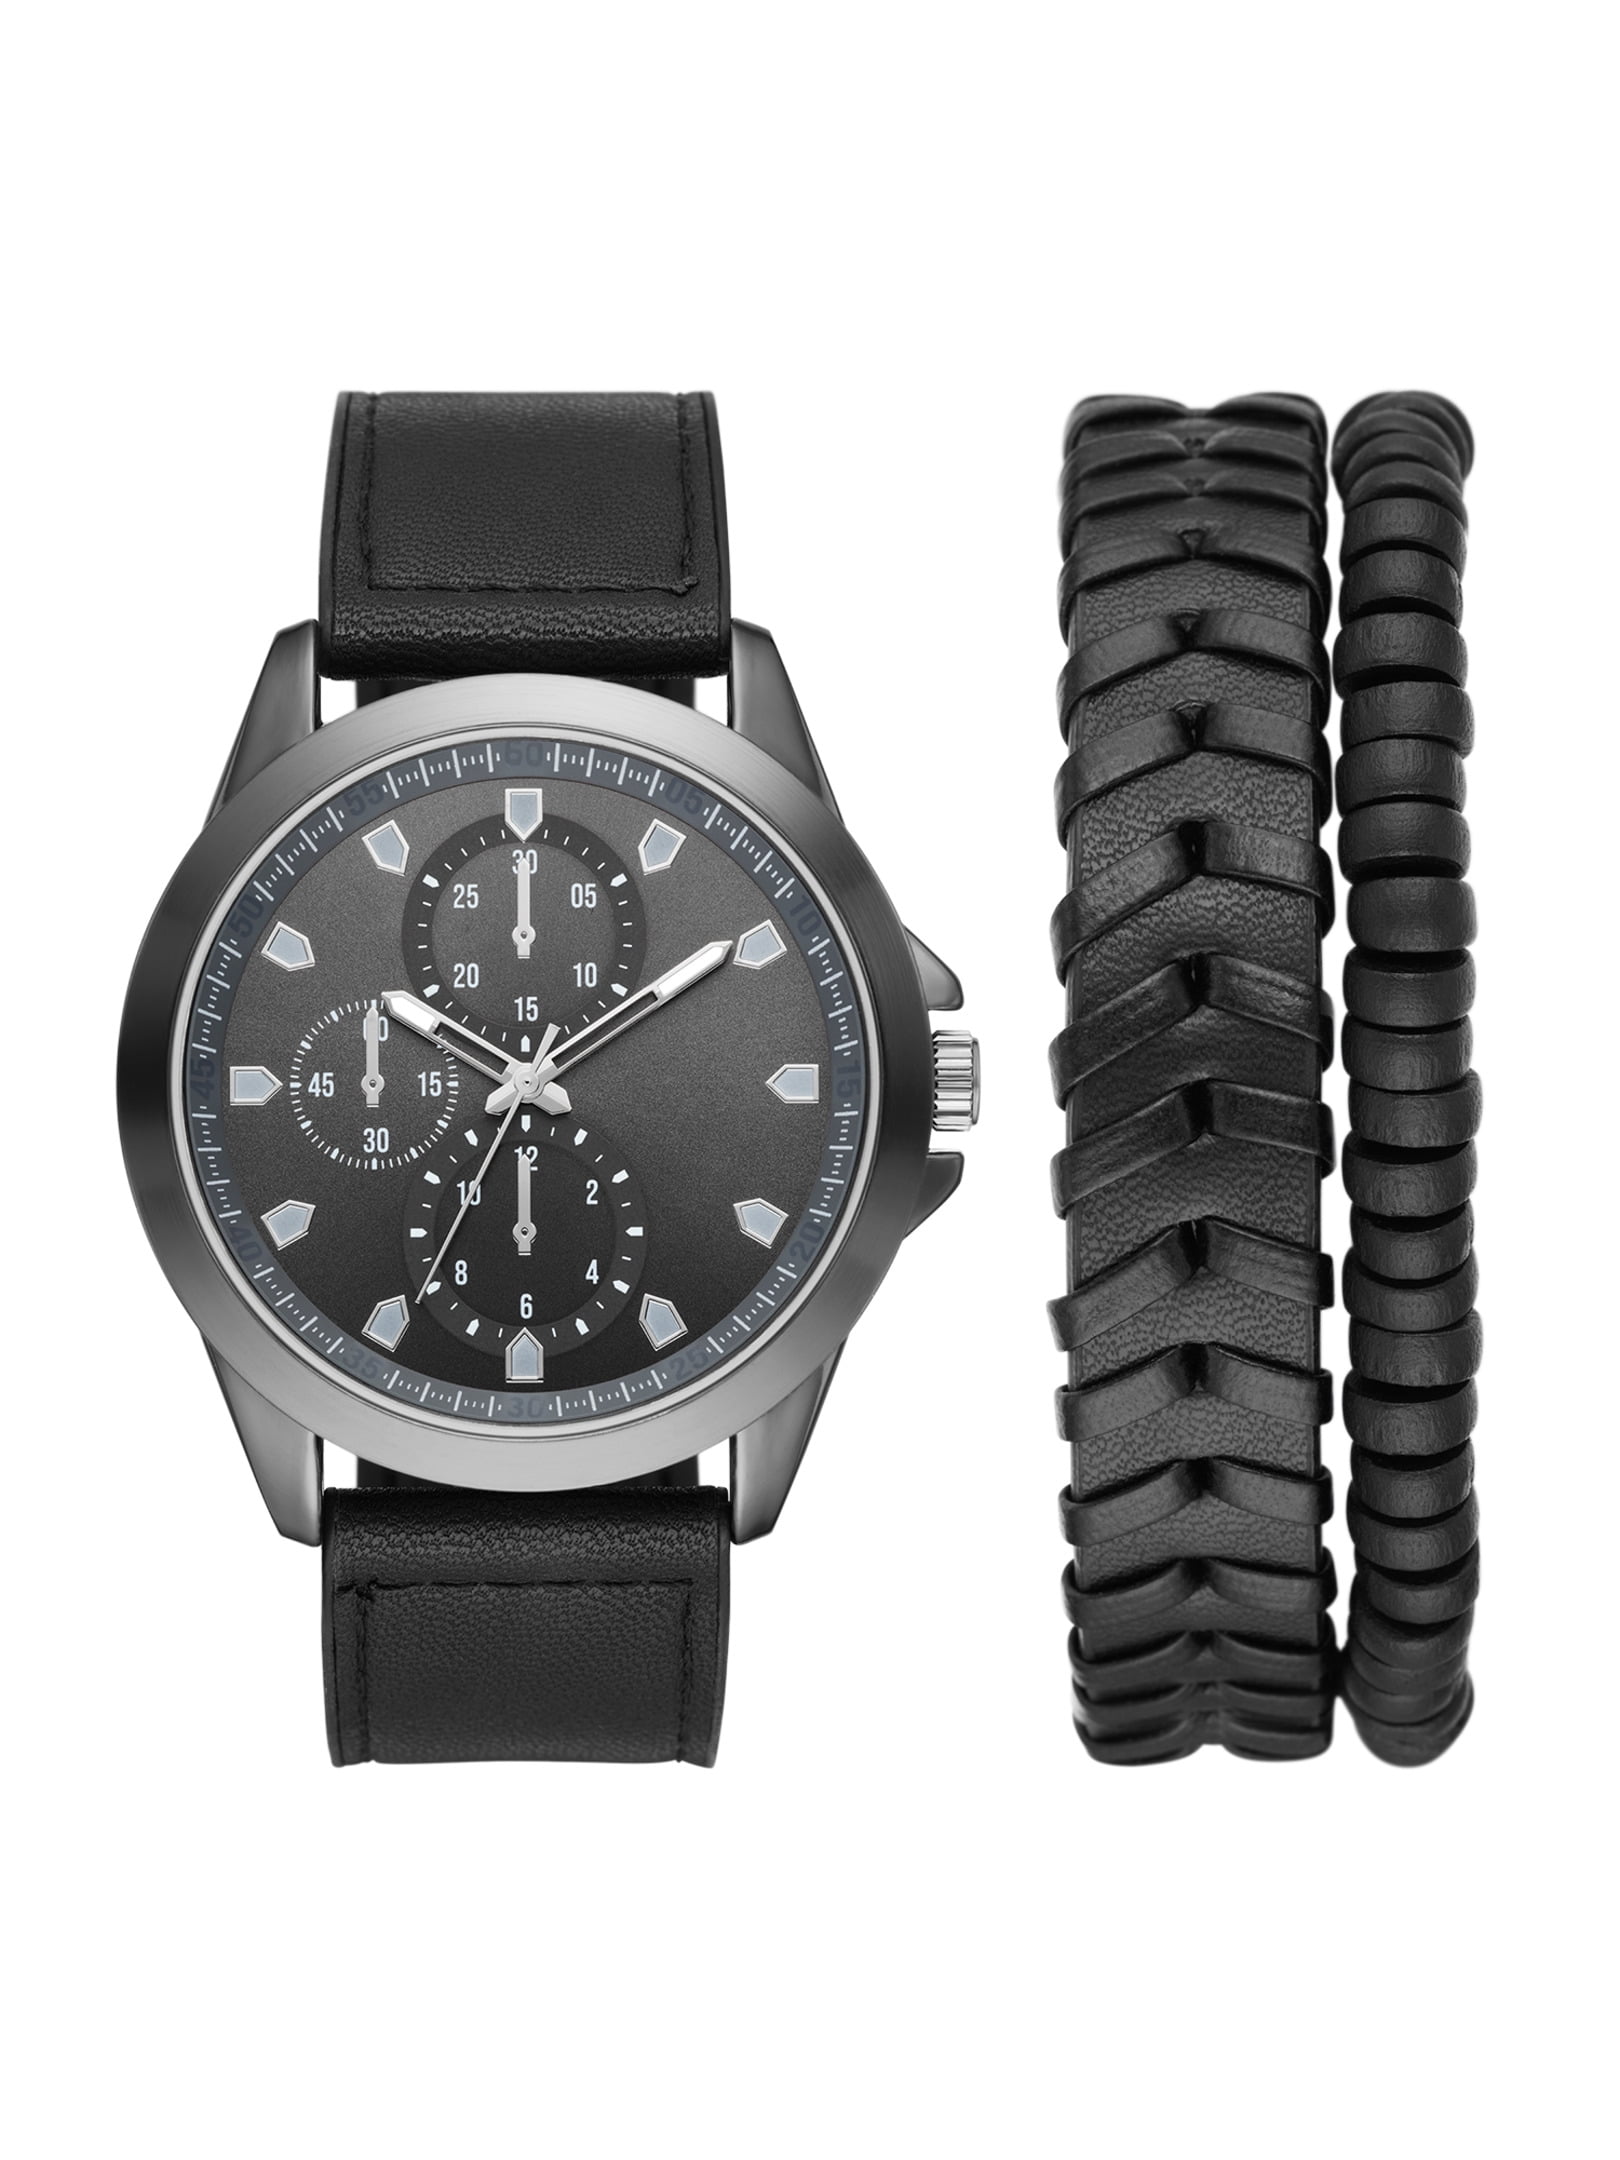 Unique Leather Cuff, Pocket Watch on a wrist cuff bracelet, Steampunk  Cyberpunk Themed Wristwatch – J&J Leather, Steampunk and Watches